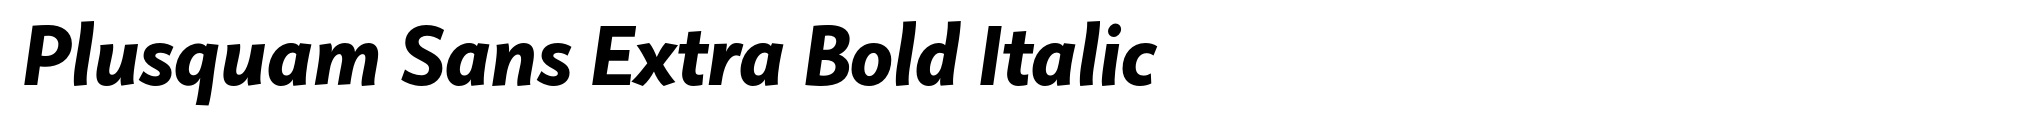 Plusquam Sans Extra Bold Italic image